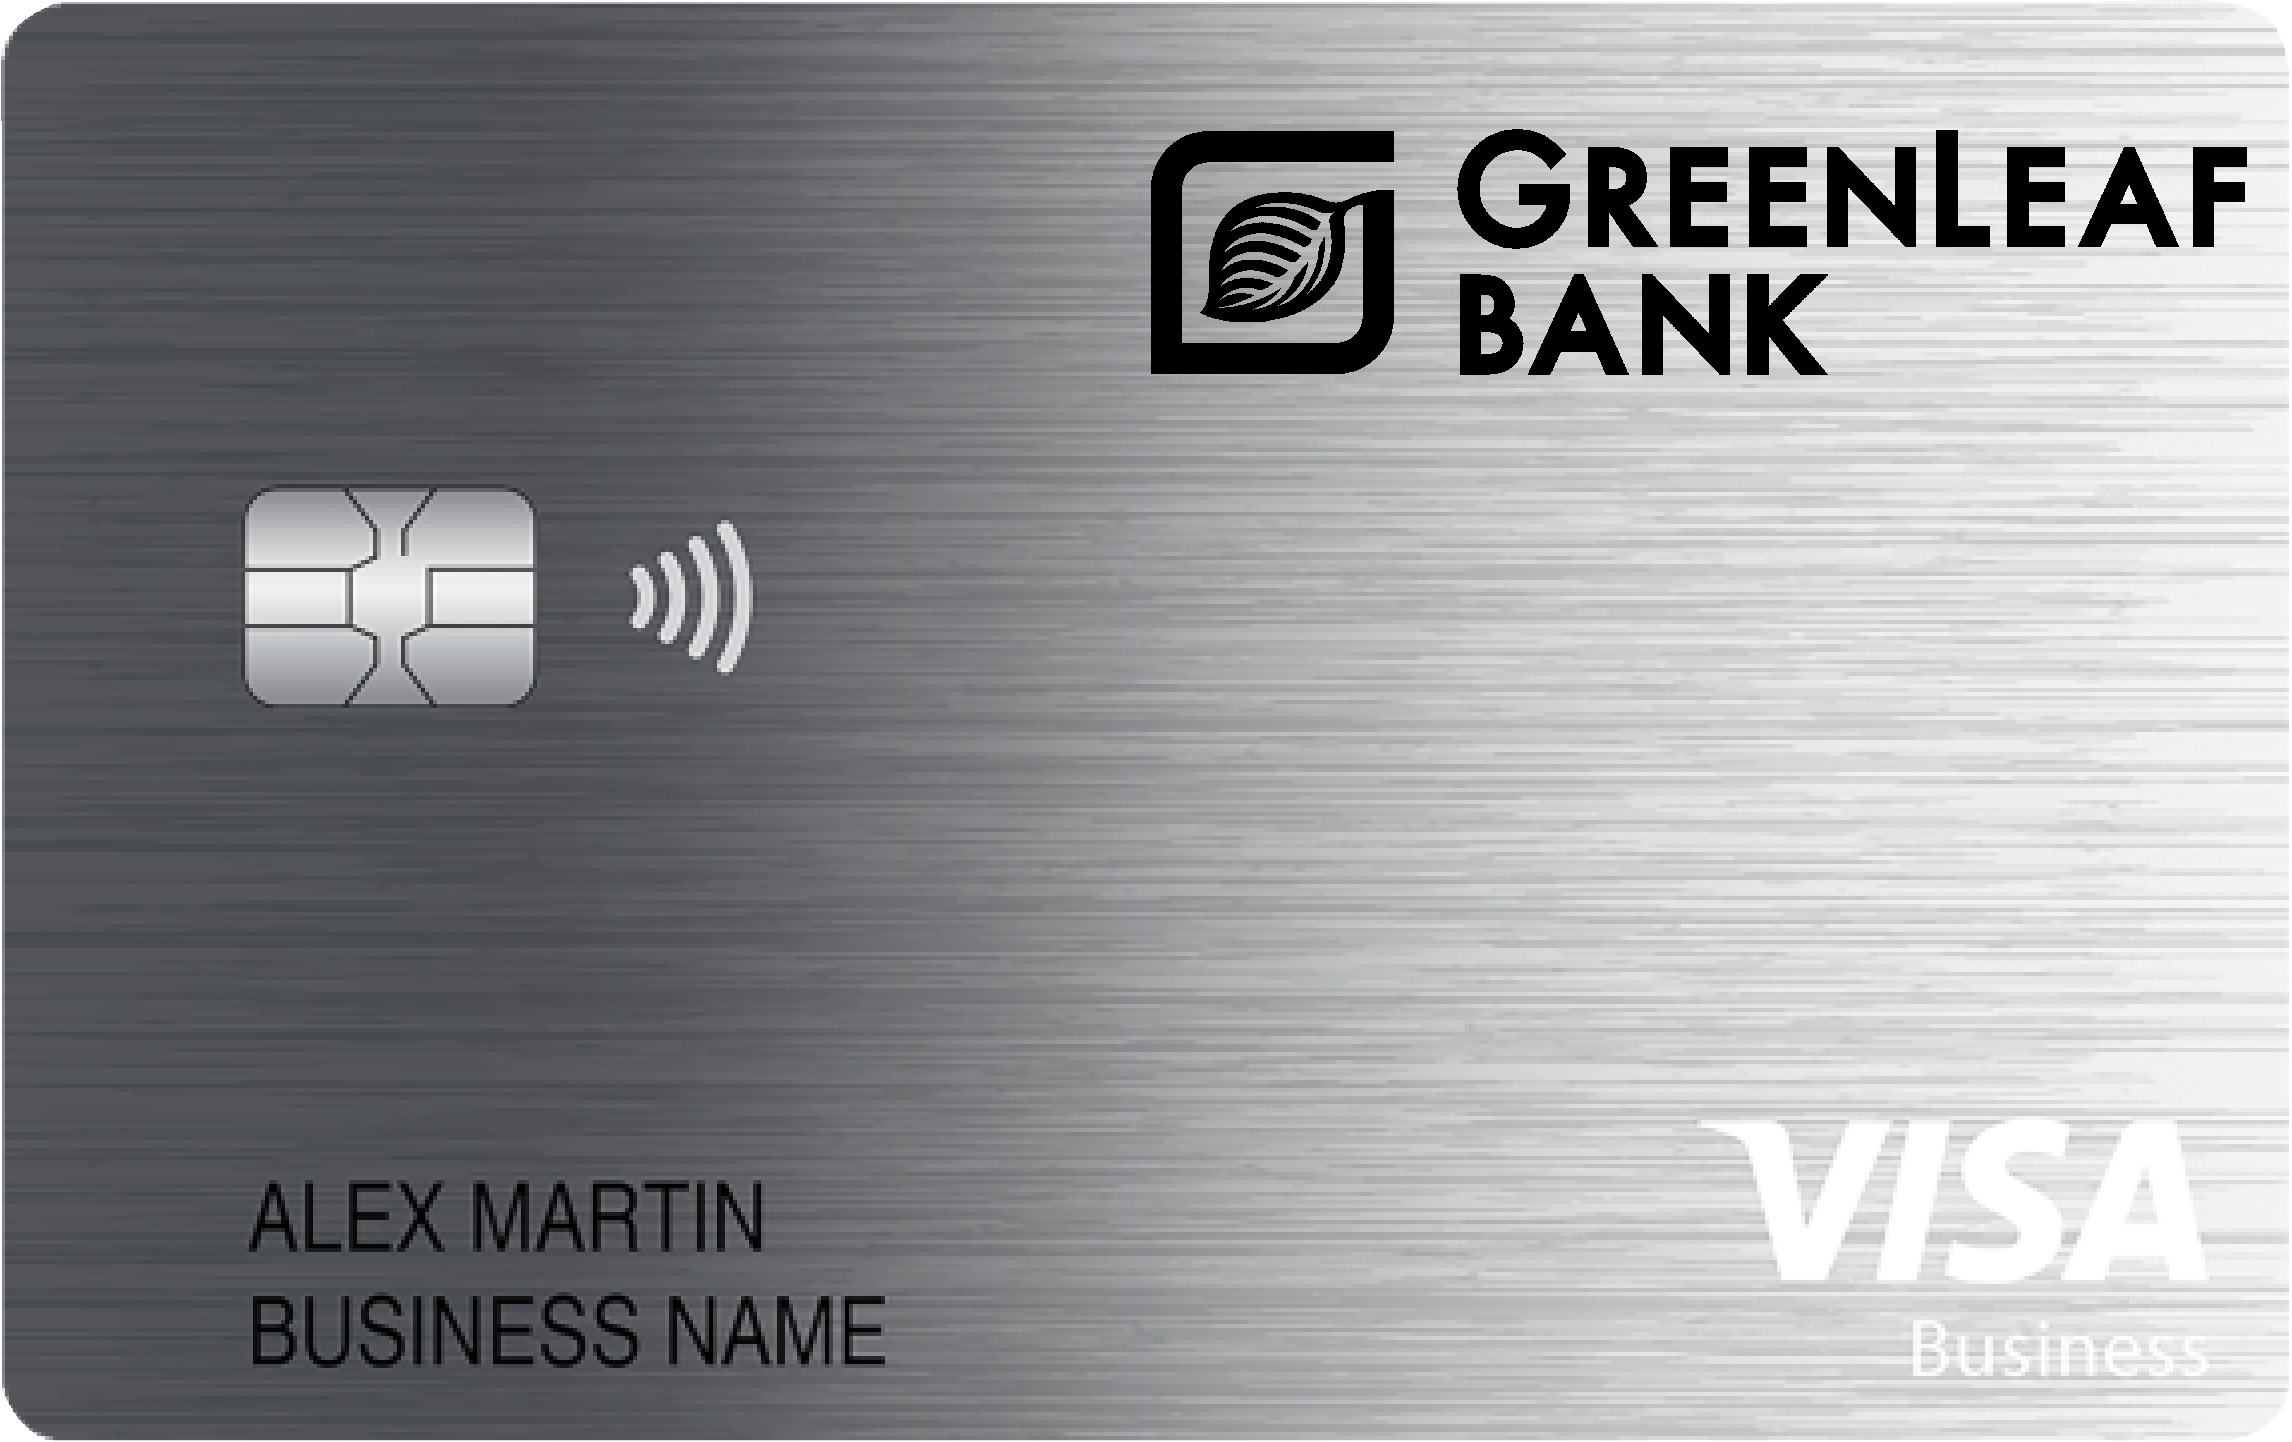 Greenleaf Bank Business Cash Preferred Card